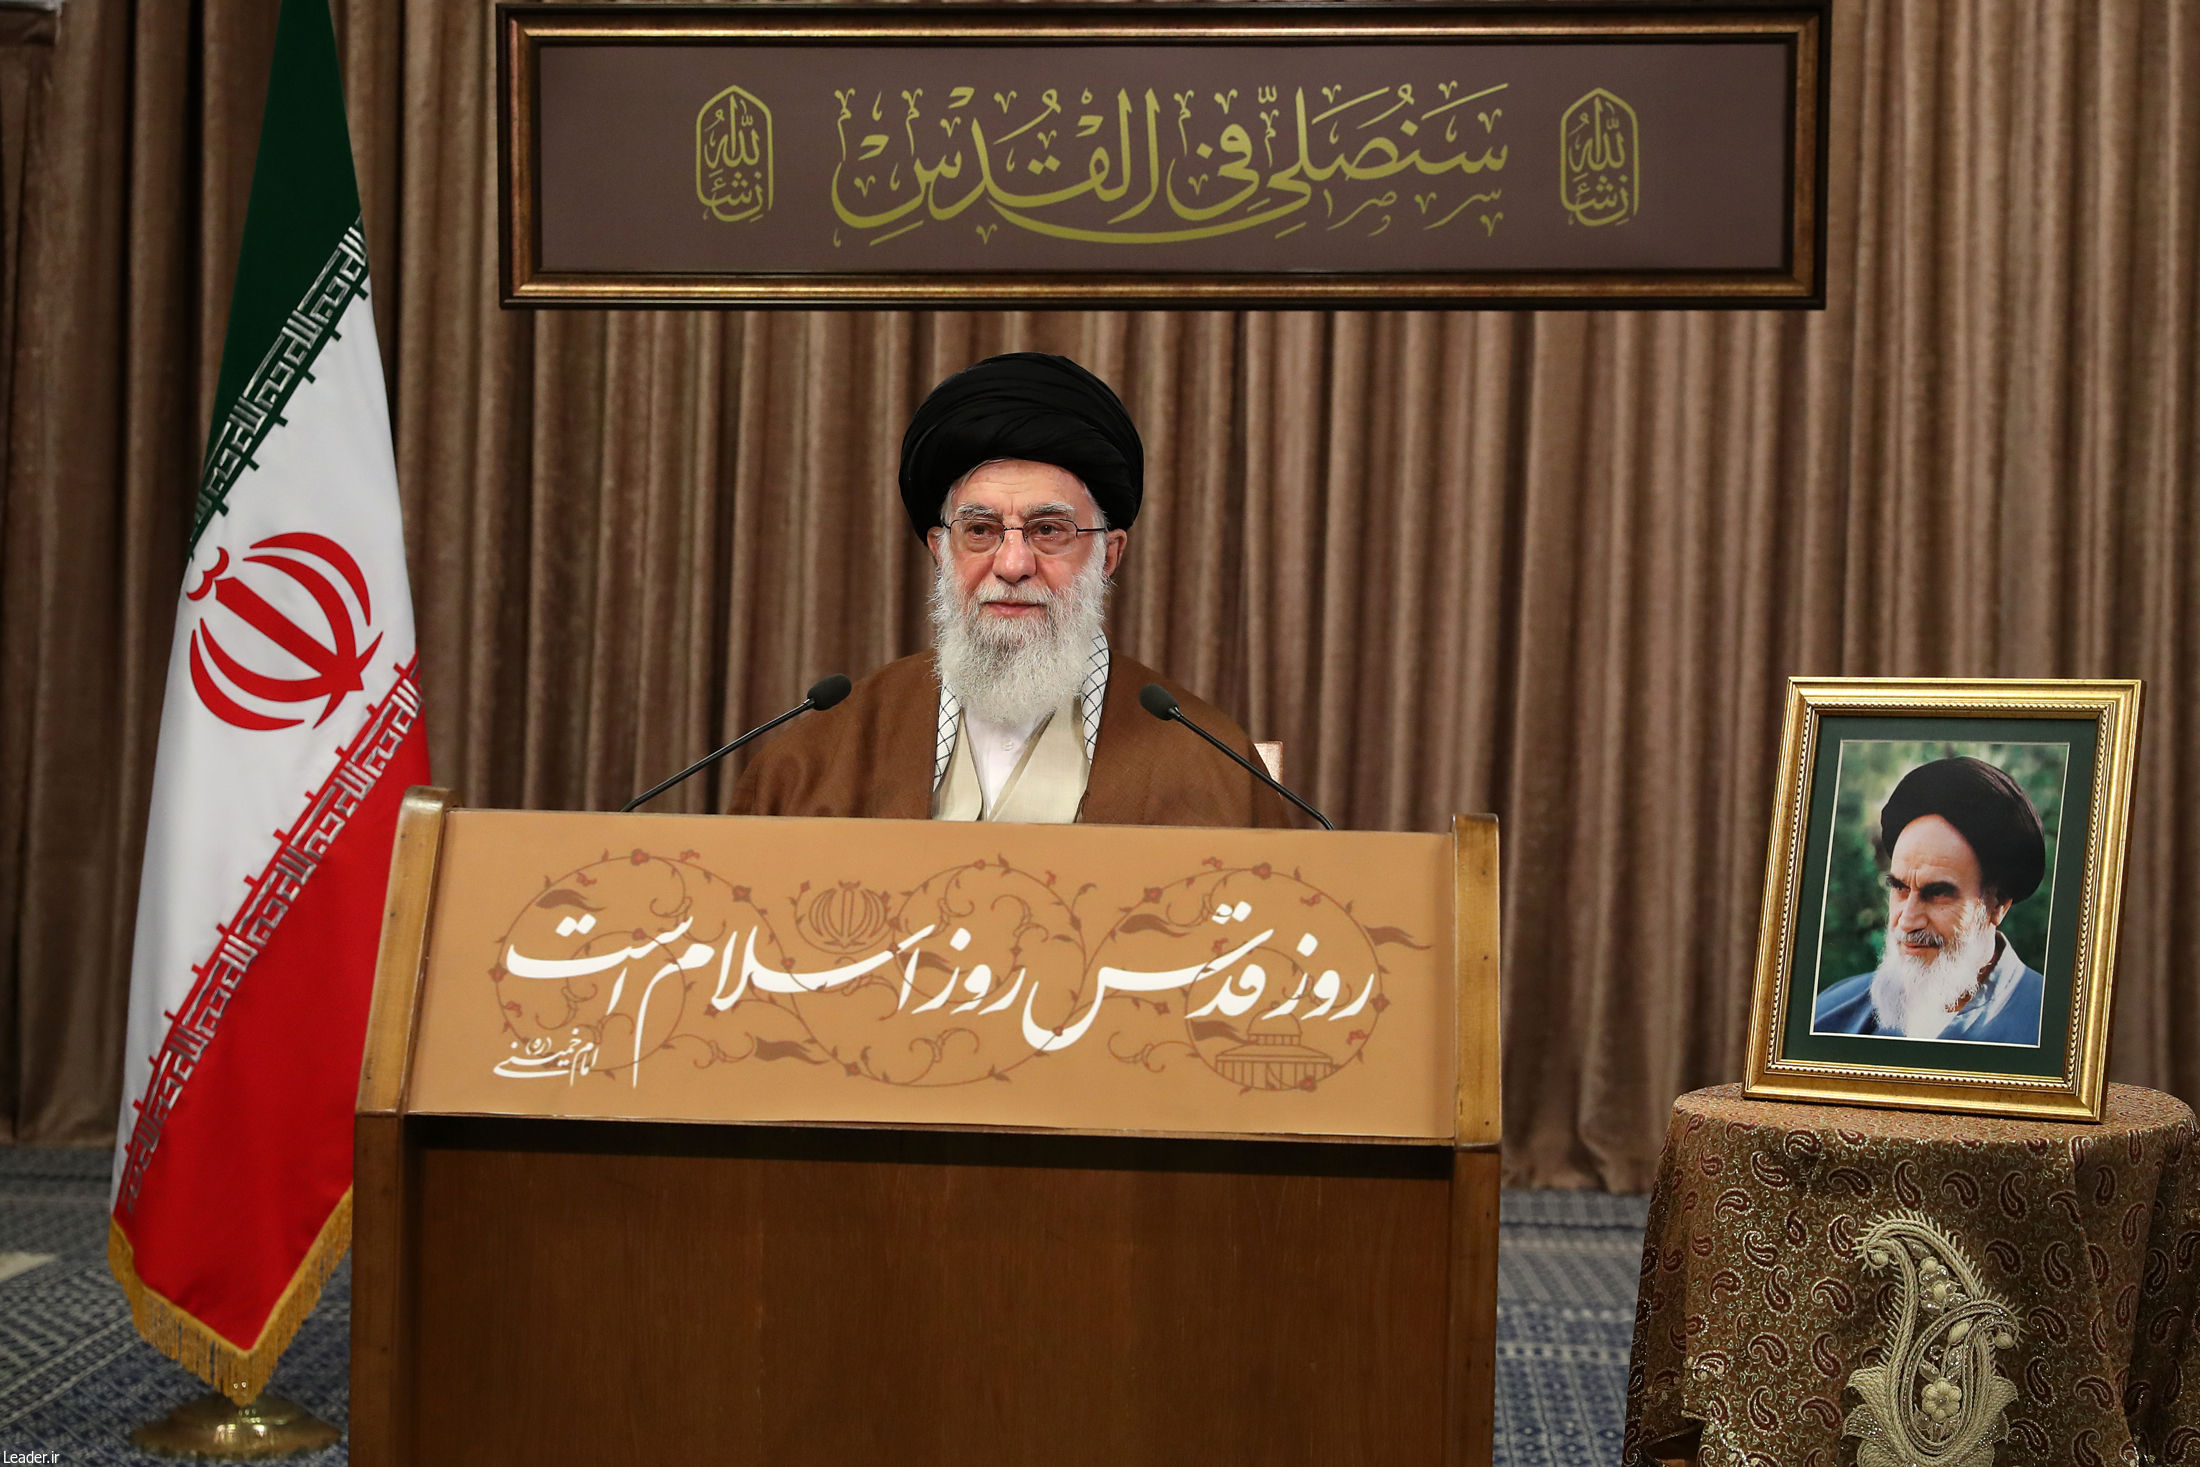 Ayatollah Khamenei: Everyone must assist in holy struggle to liberate Palestine